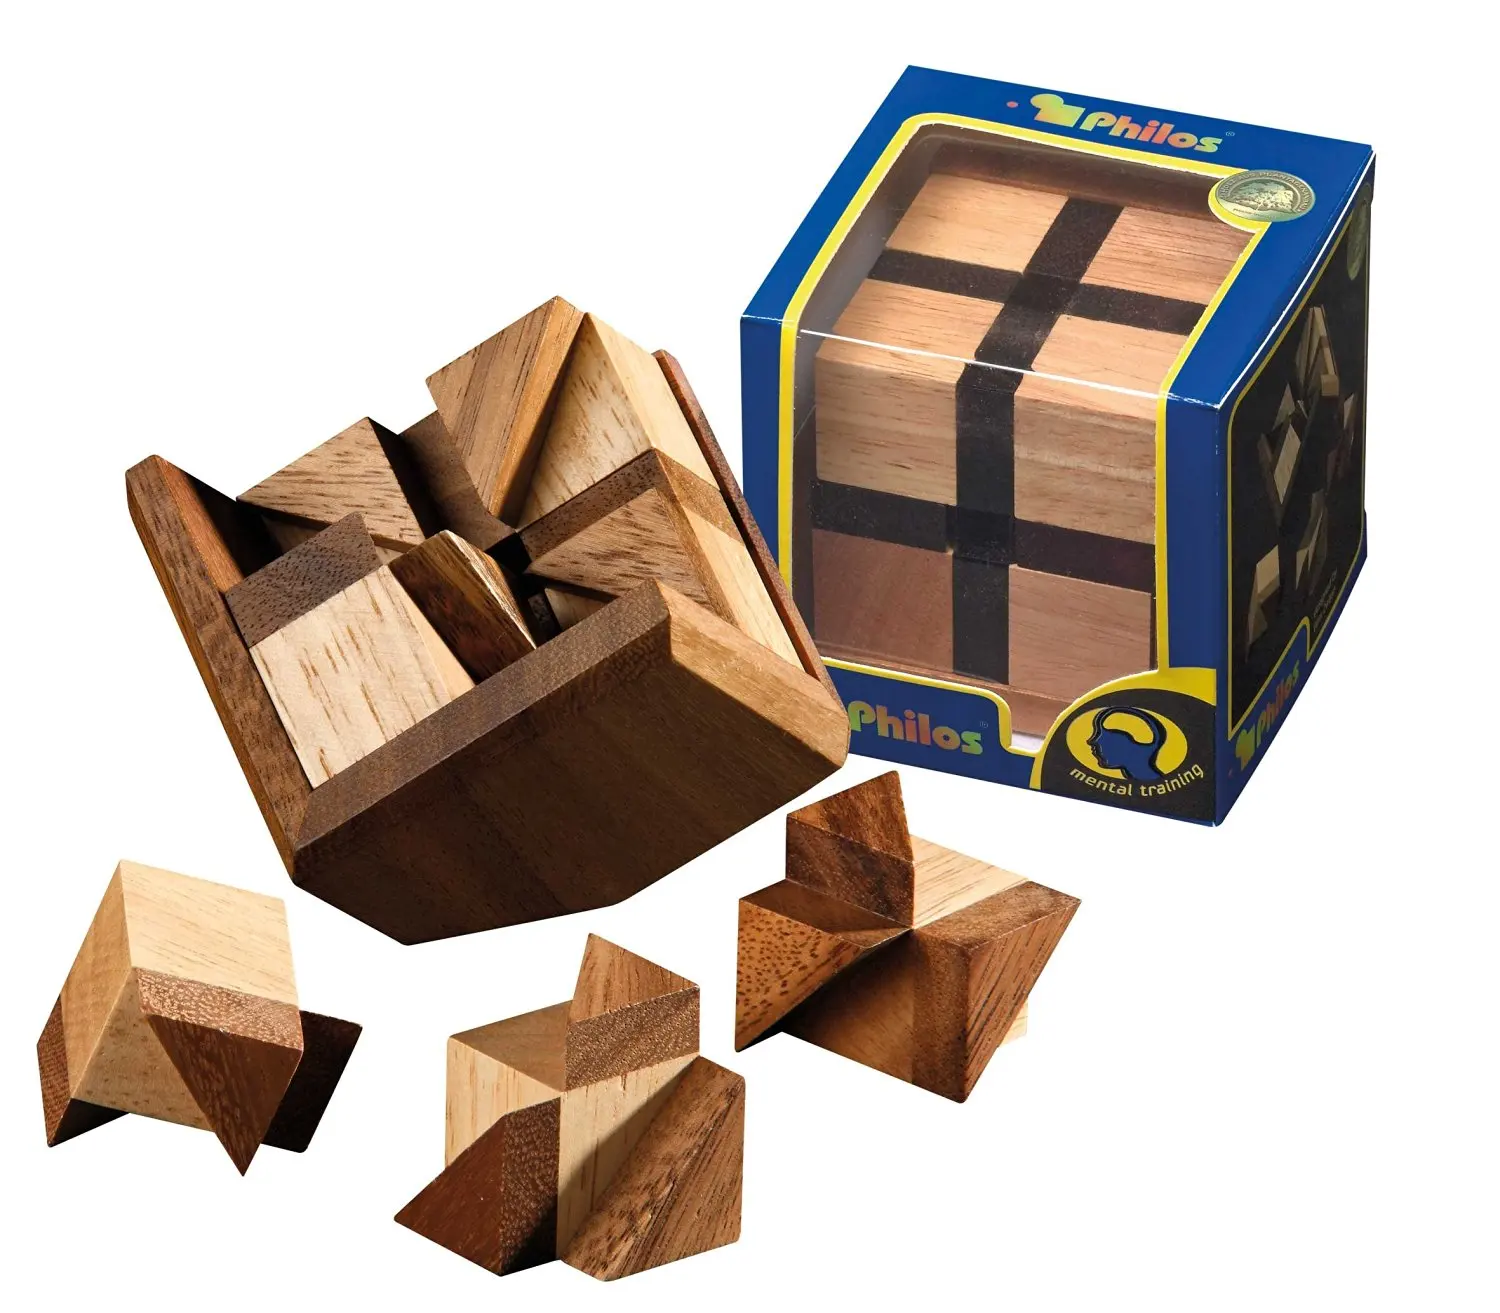 More cubes. Головоломка куб, Пелси и632. Головоломка пазл куб. Wood Cube Puzzle. Wood Cube icon.